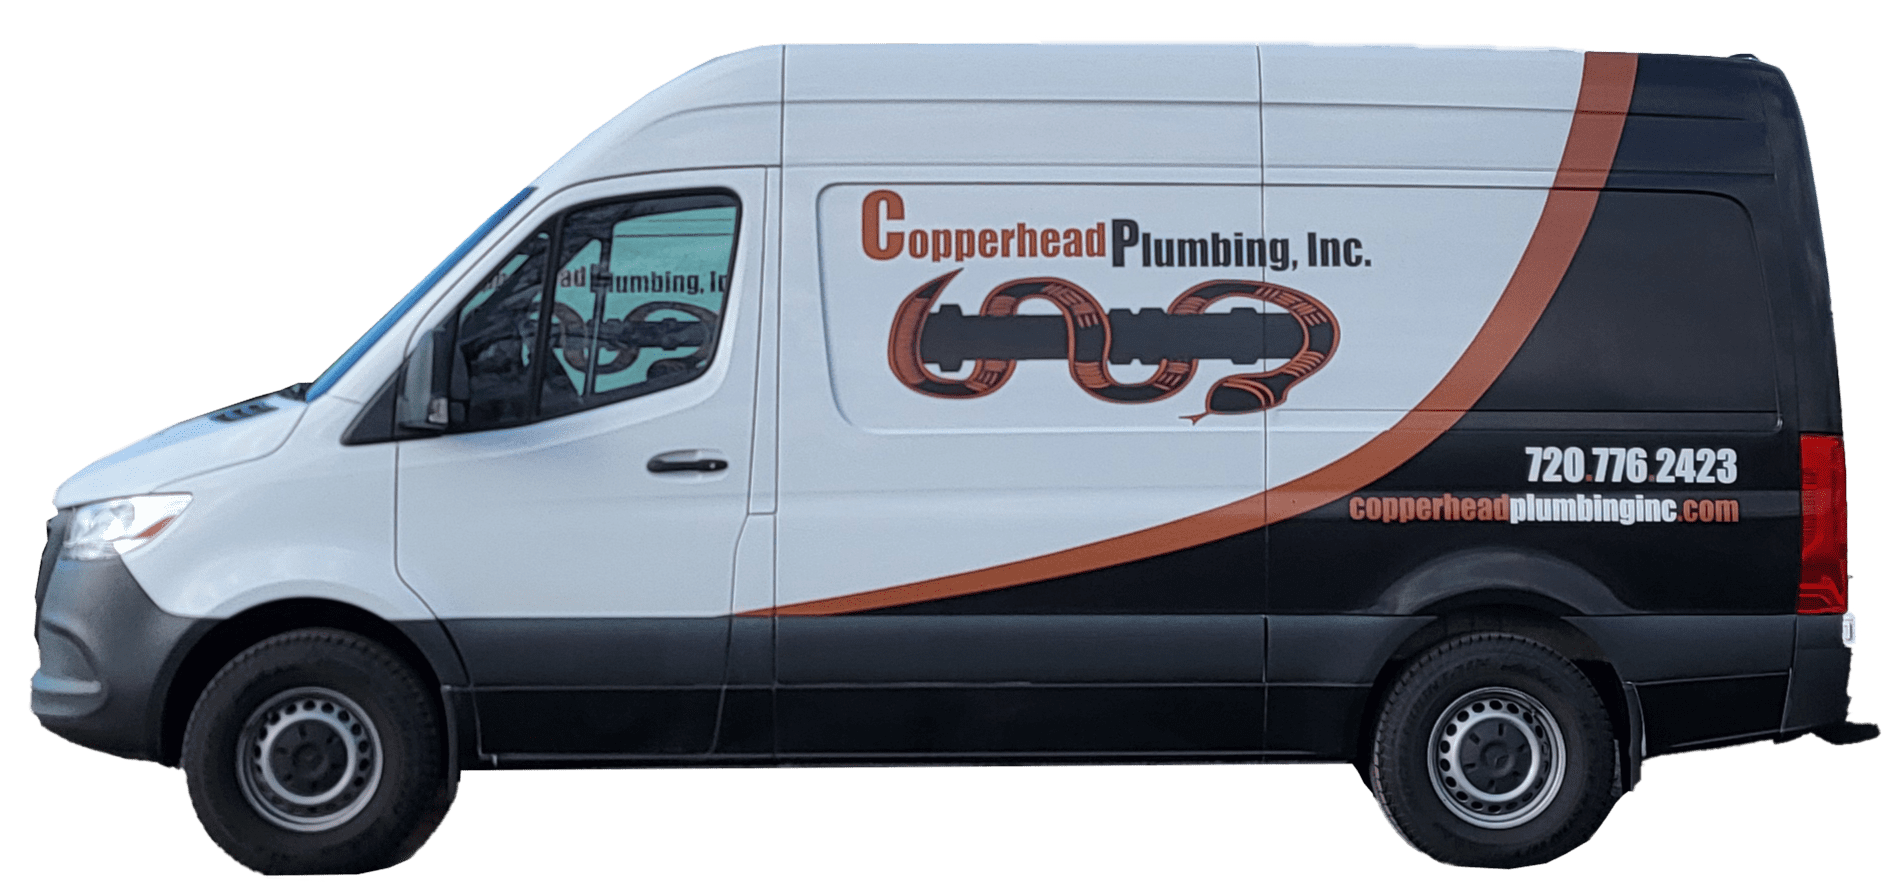 Call Copperhead Plumbing, Inc.